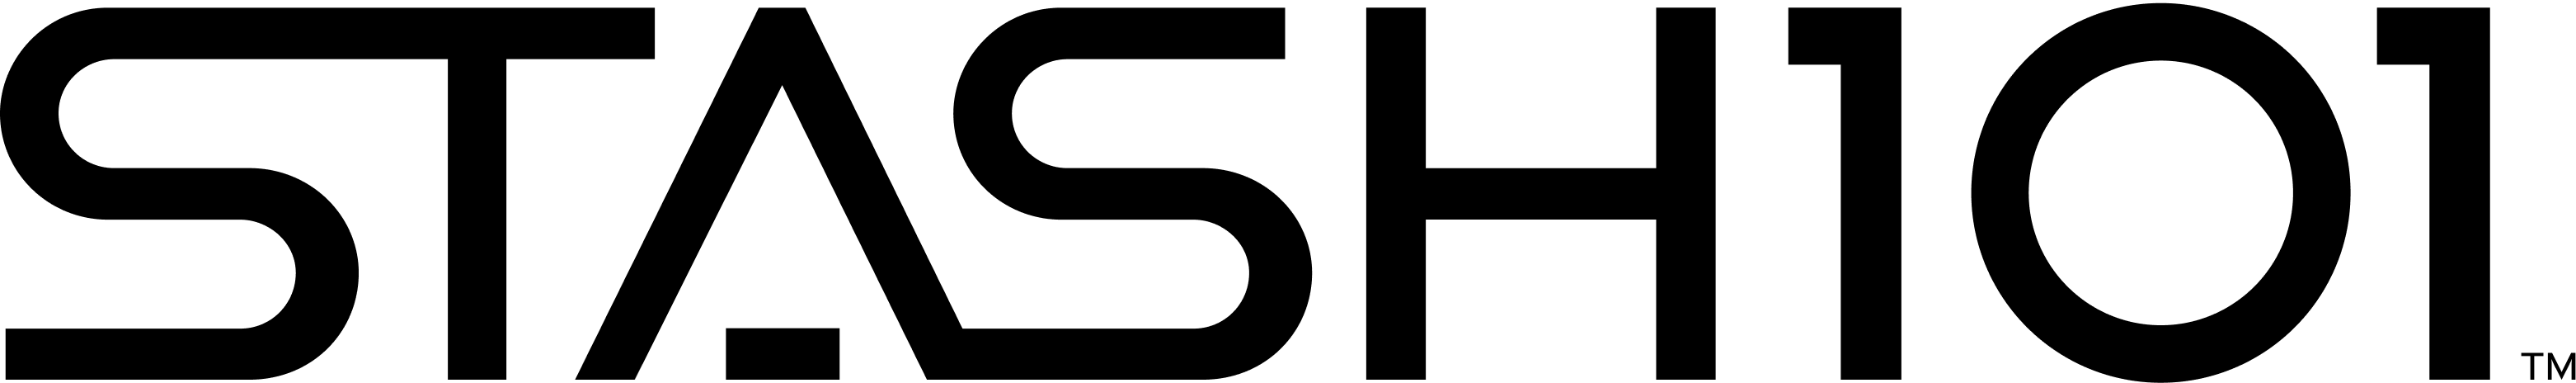 Stash101-Logo-black